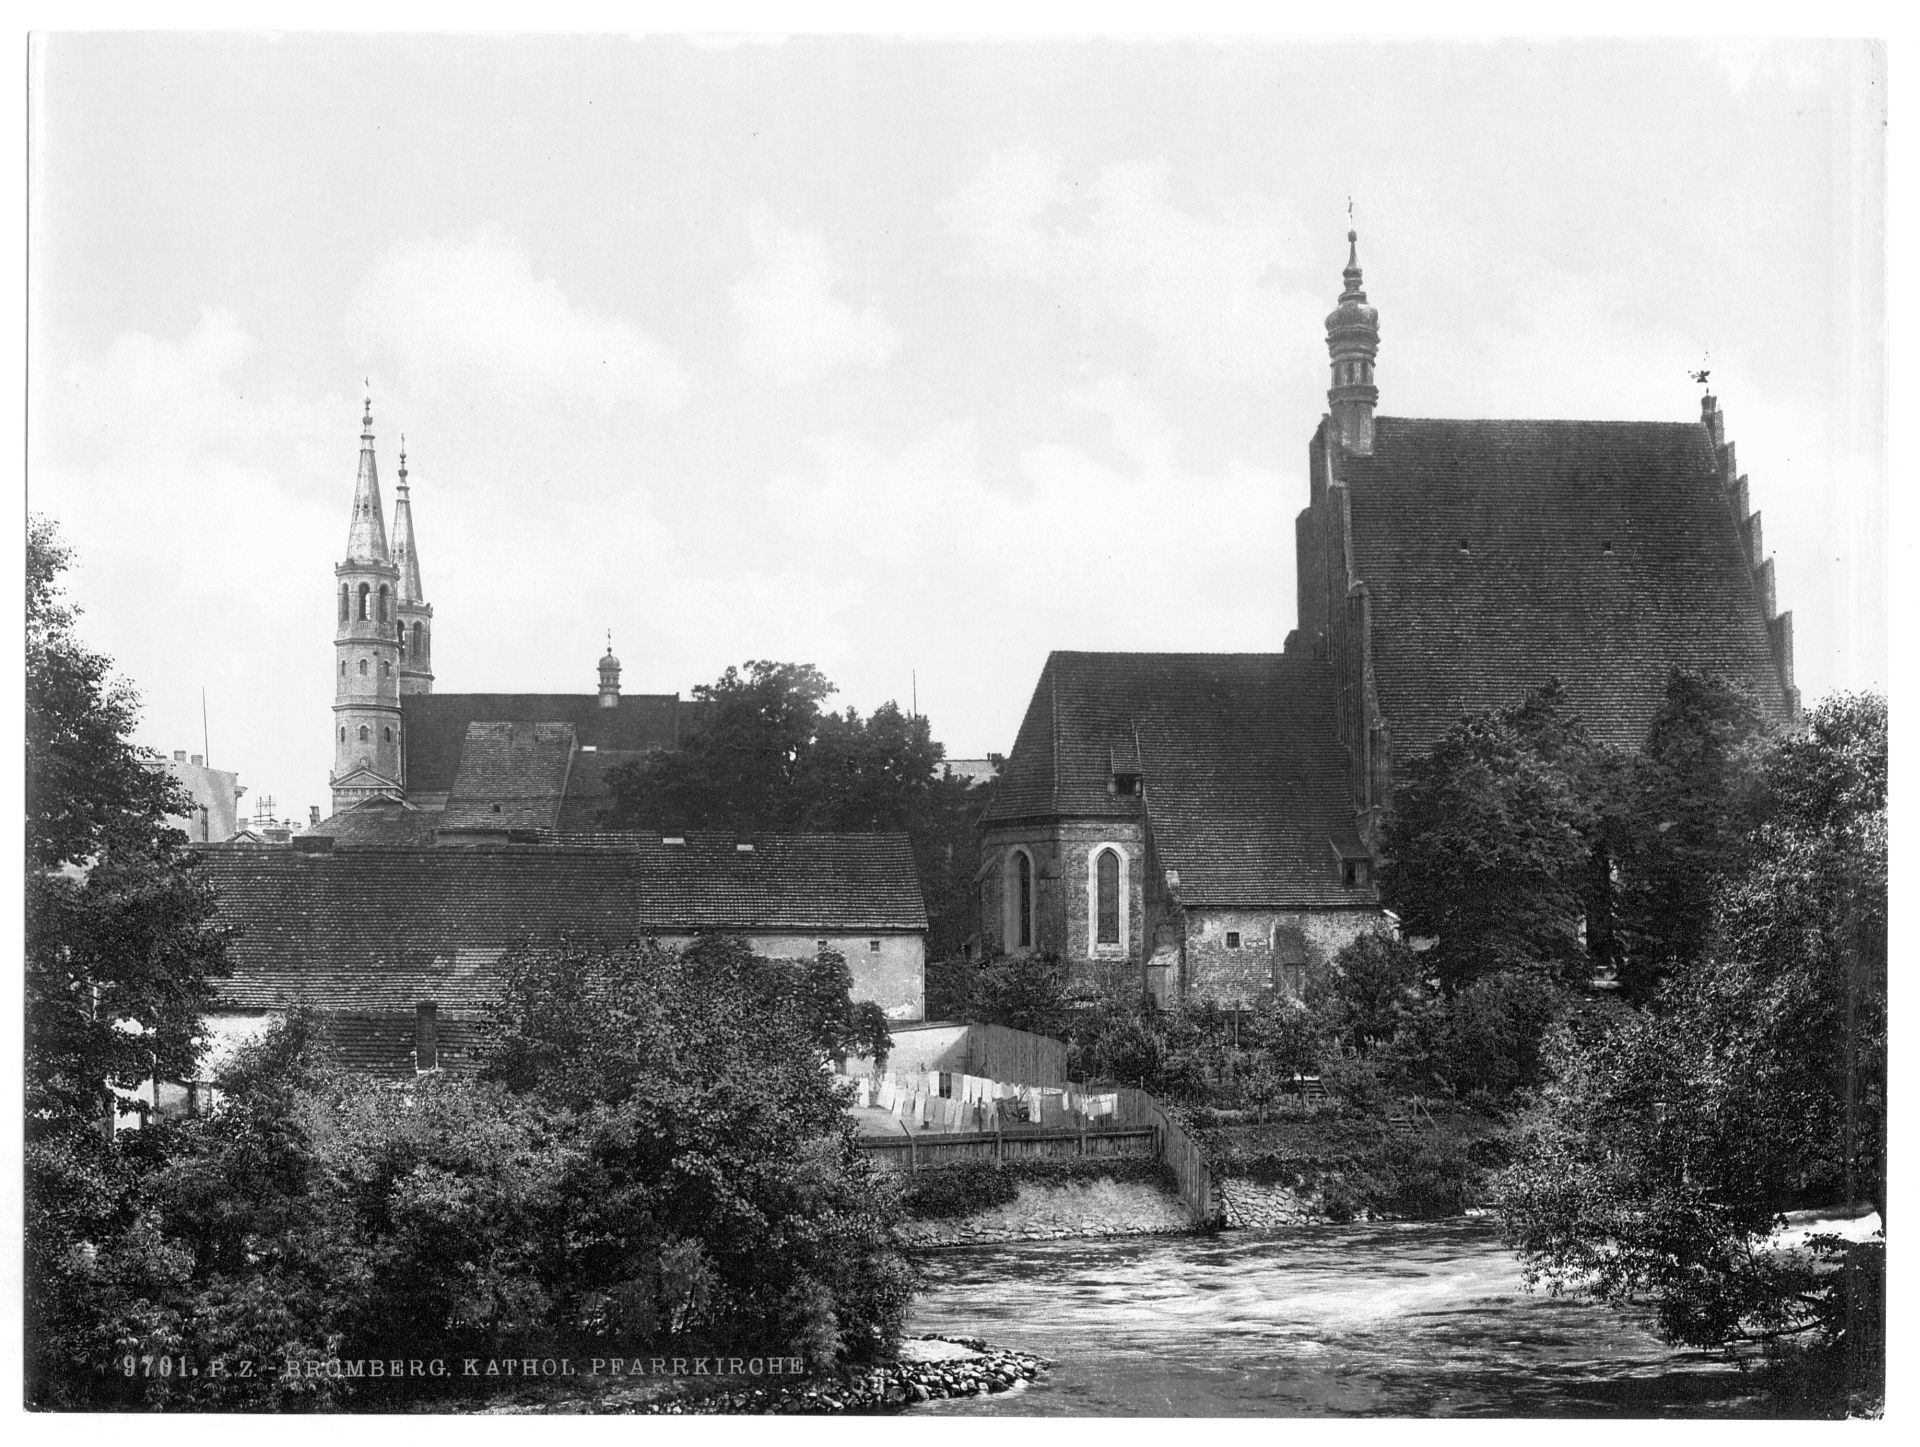 Pfarr Church, Bromberg, Germany (i.e., Bydgoszcz, Poland)